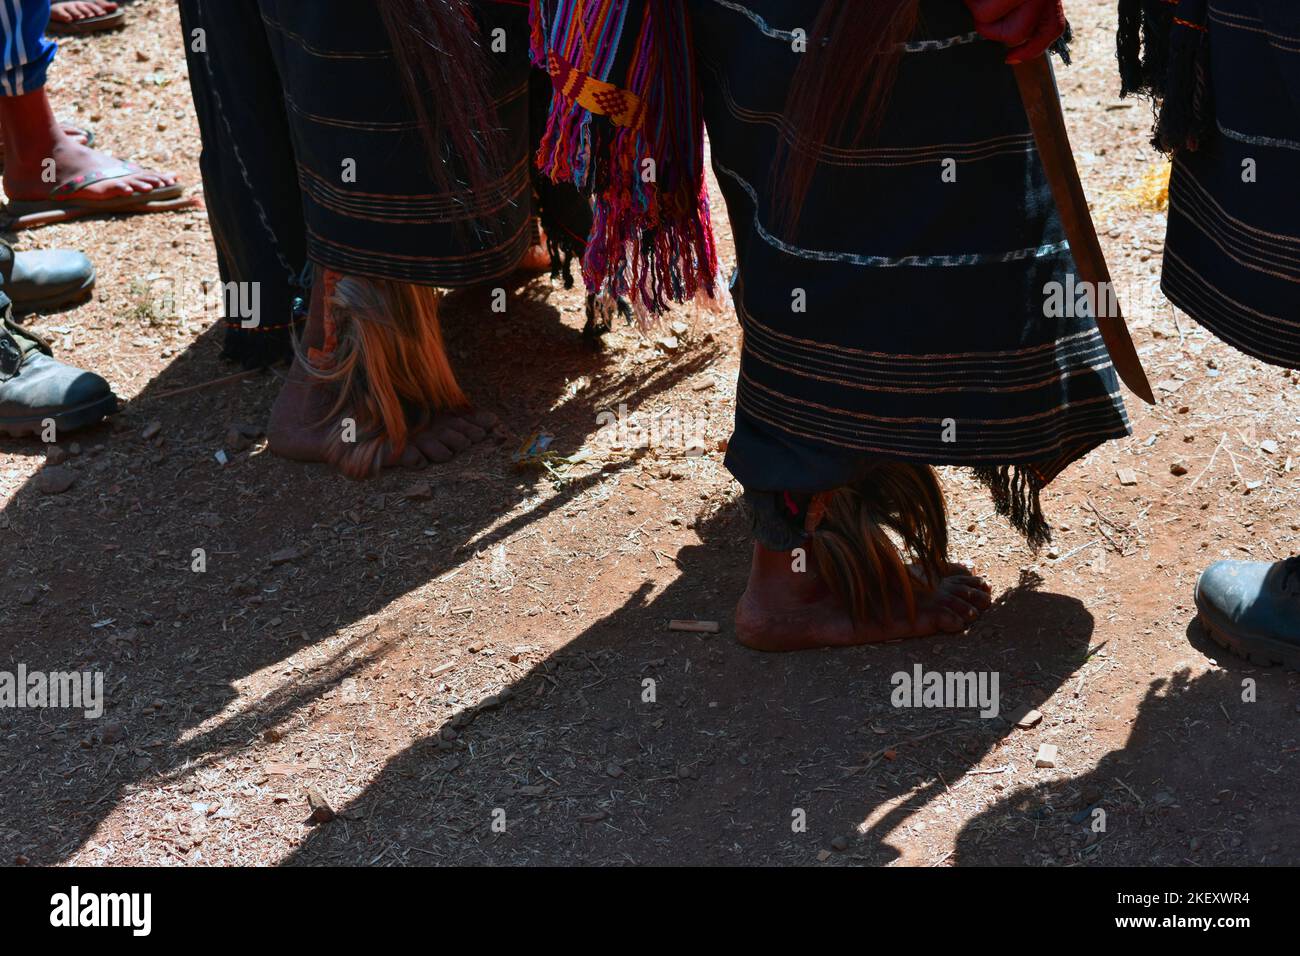 Osttimor, traditioneller Tanz. Stockfoto